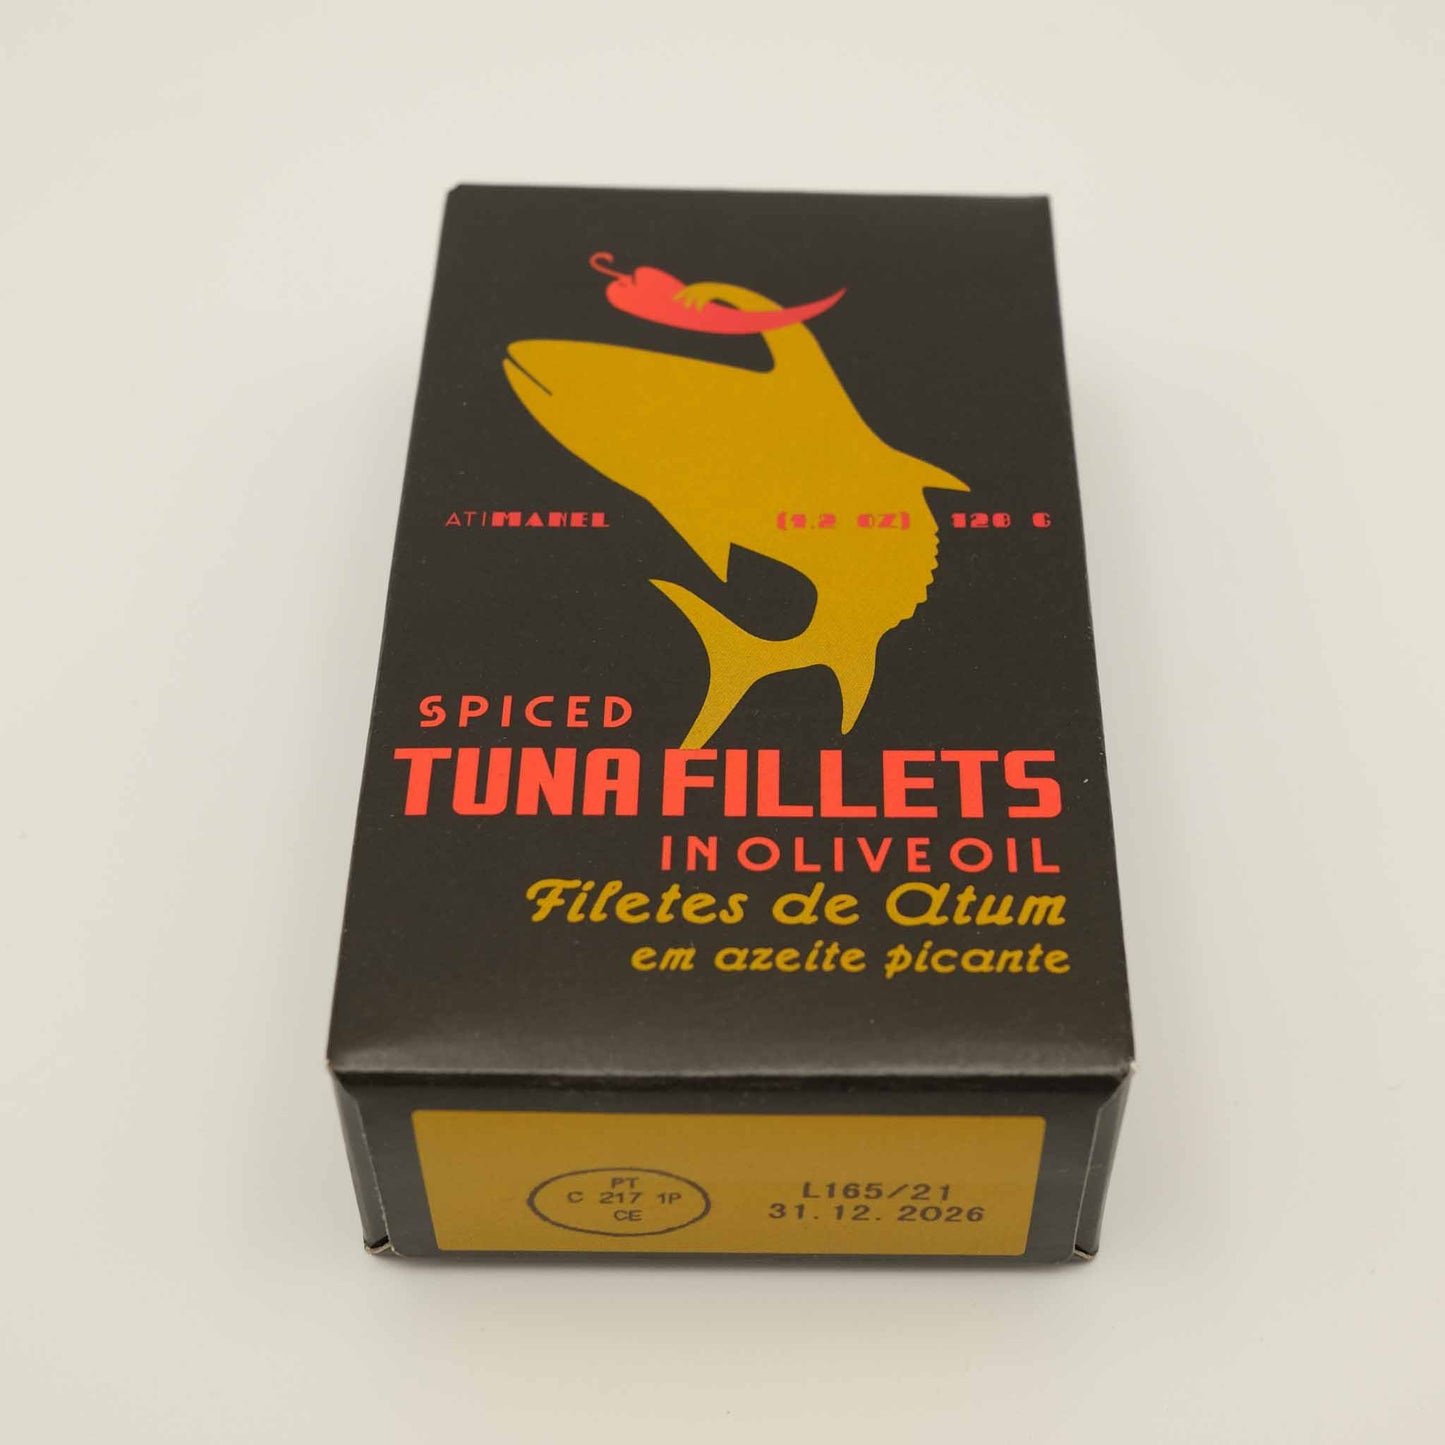 Ati Manel Spiced Tuna Fillets